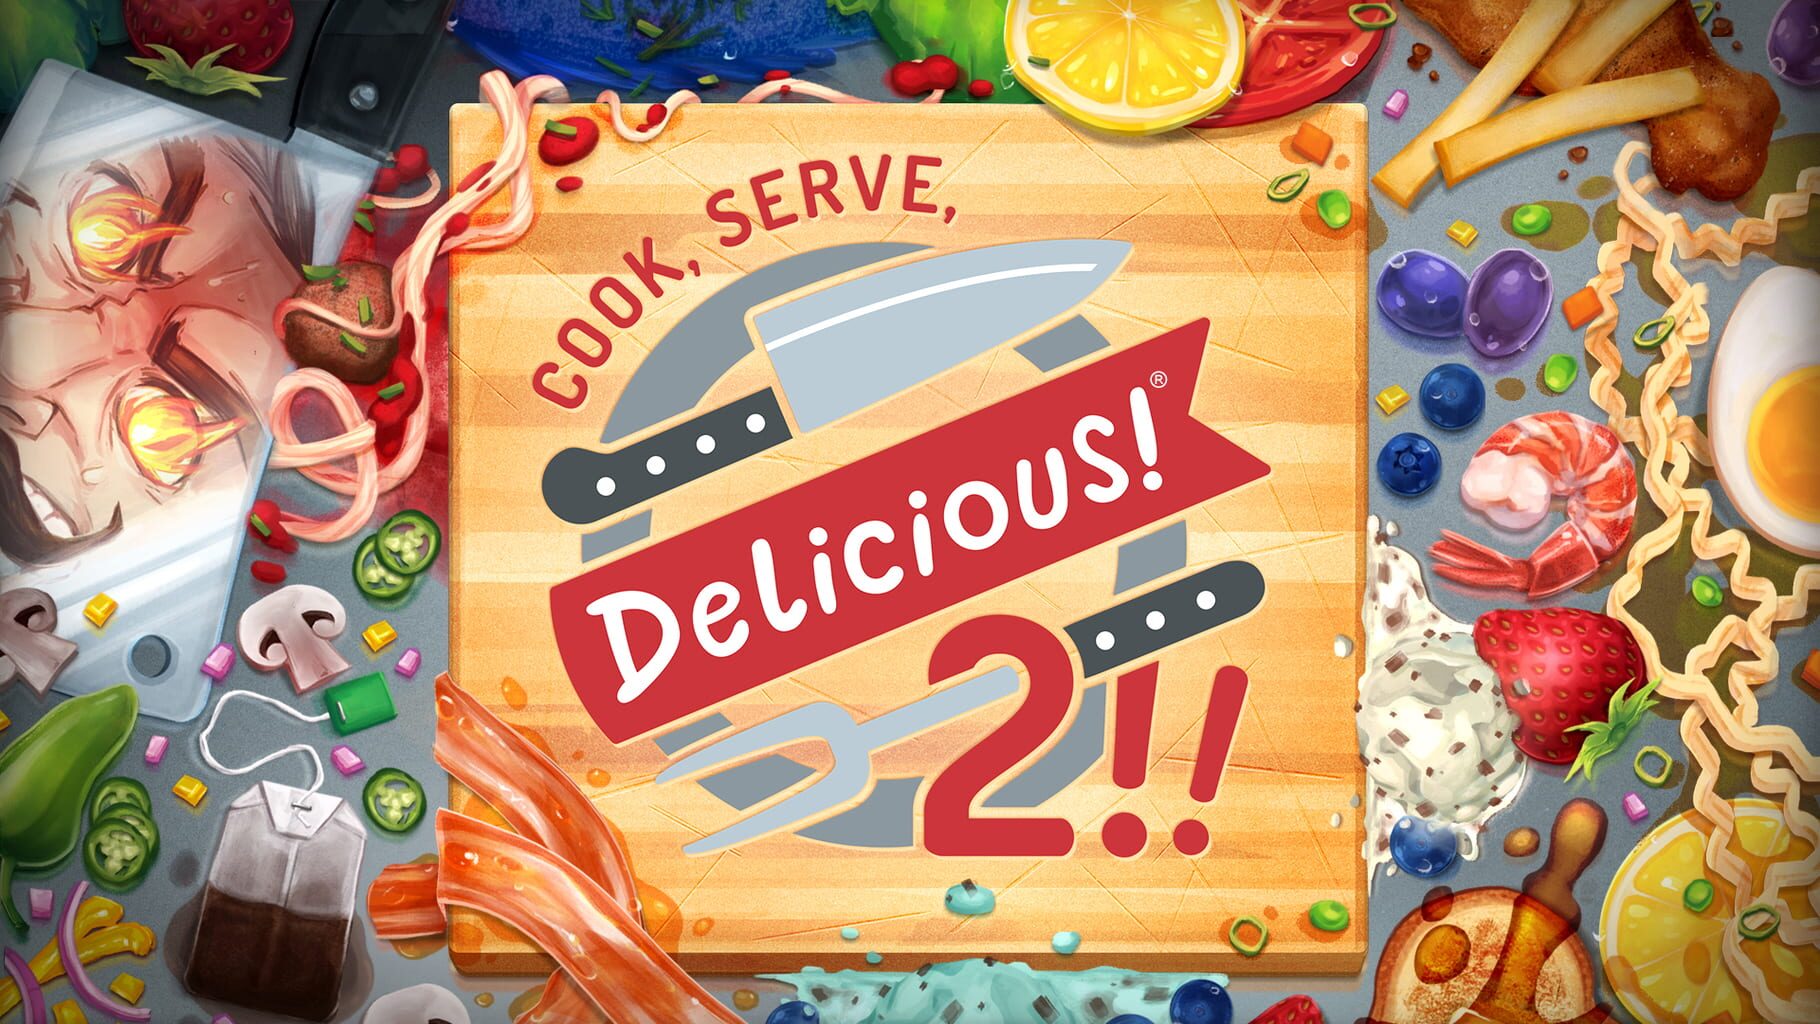 Cook, Serve, Delicious! 2!! artwork